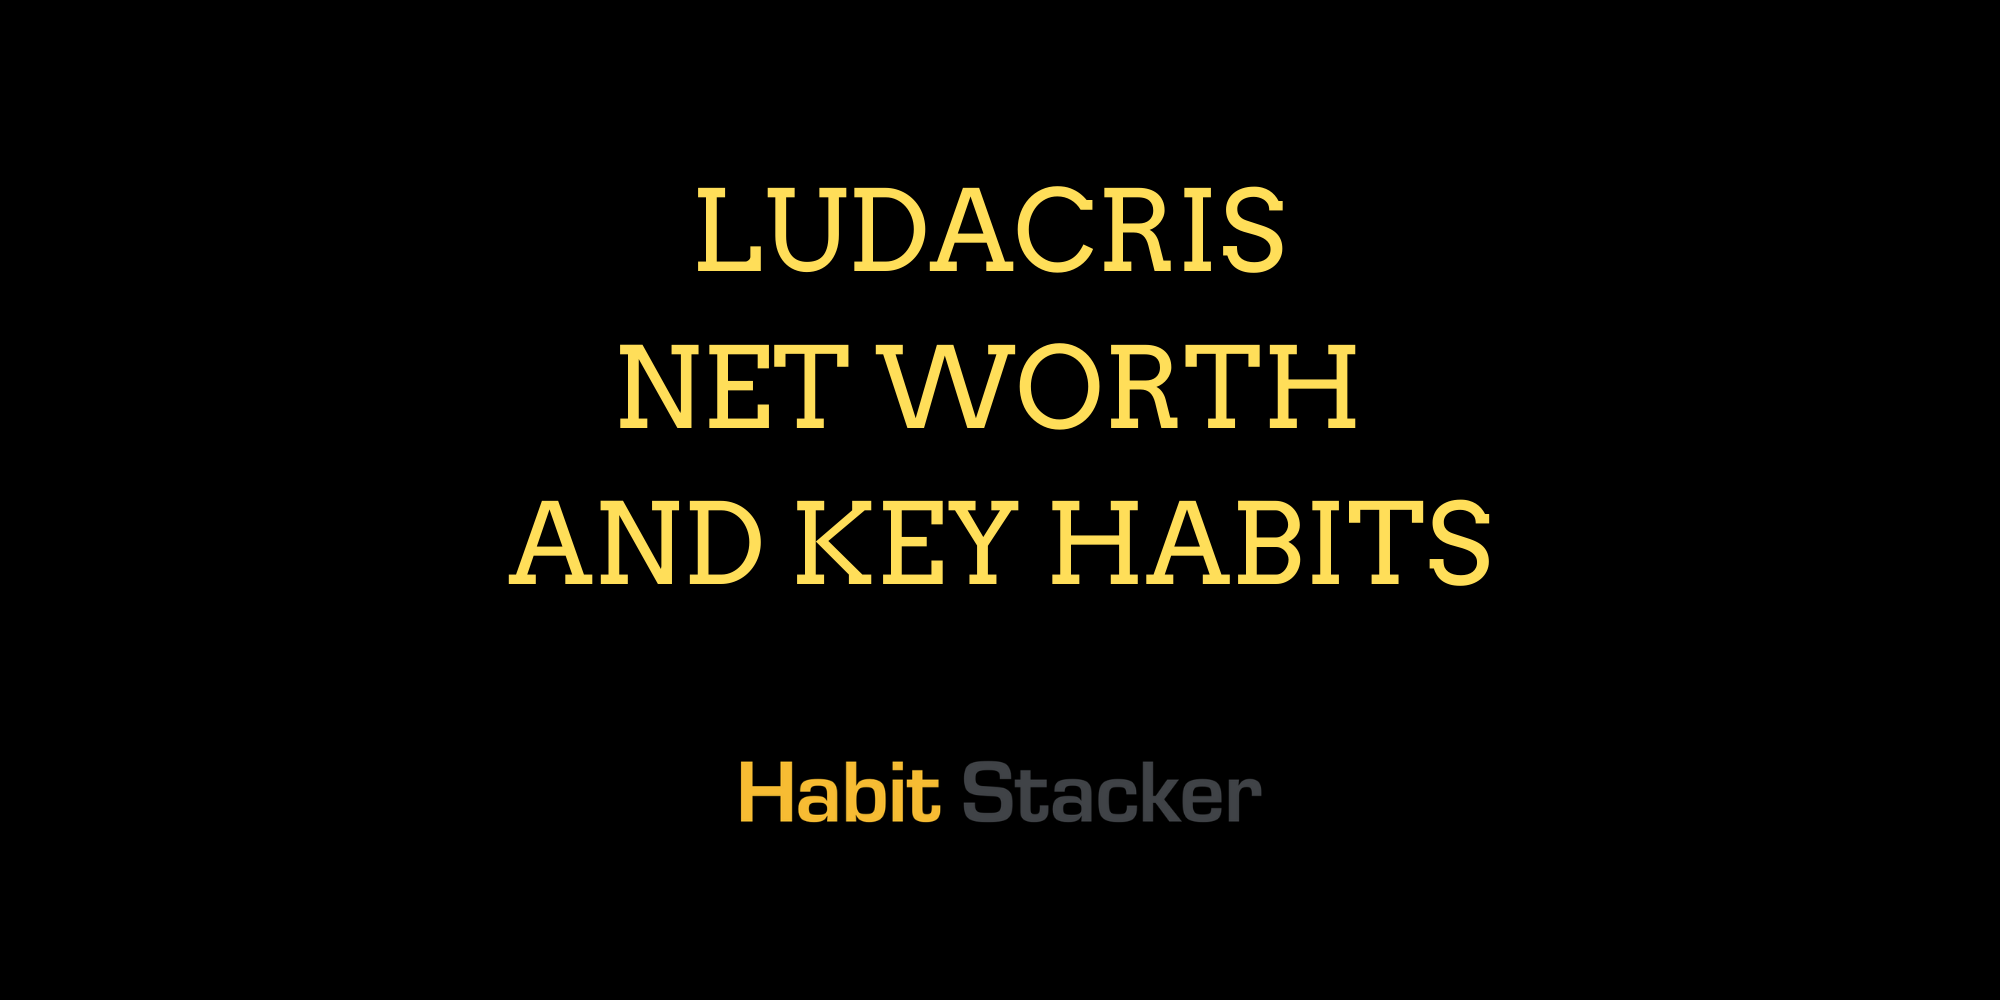 Ludacris Net Worth and Key Habits